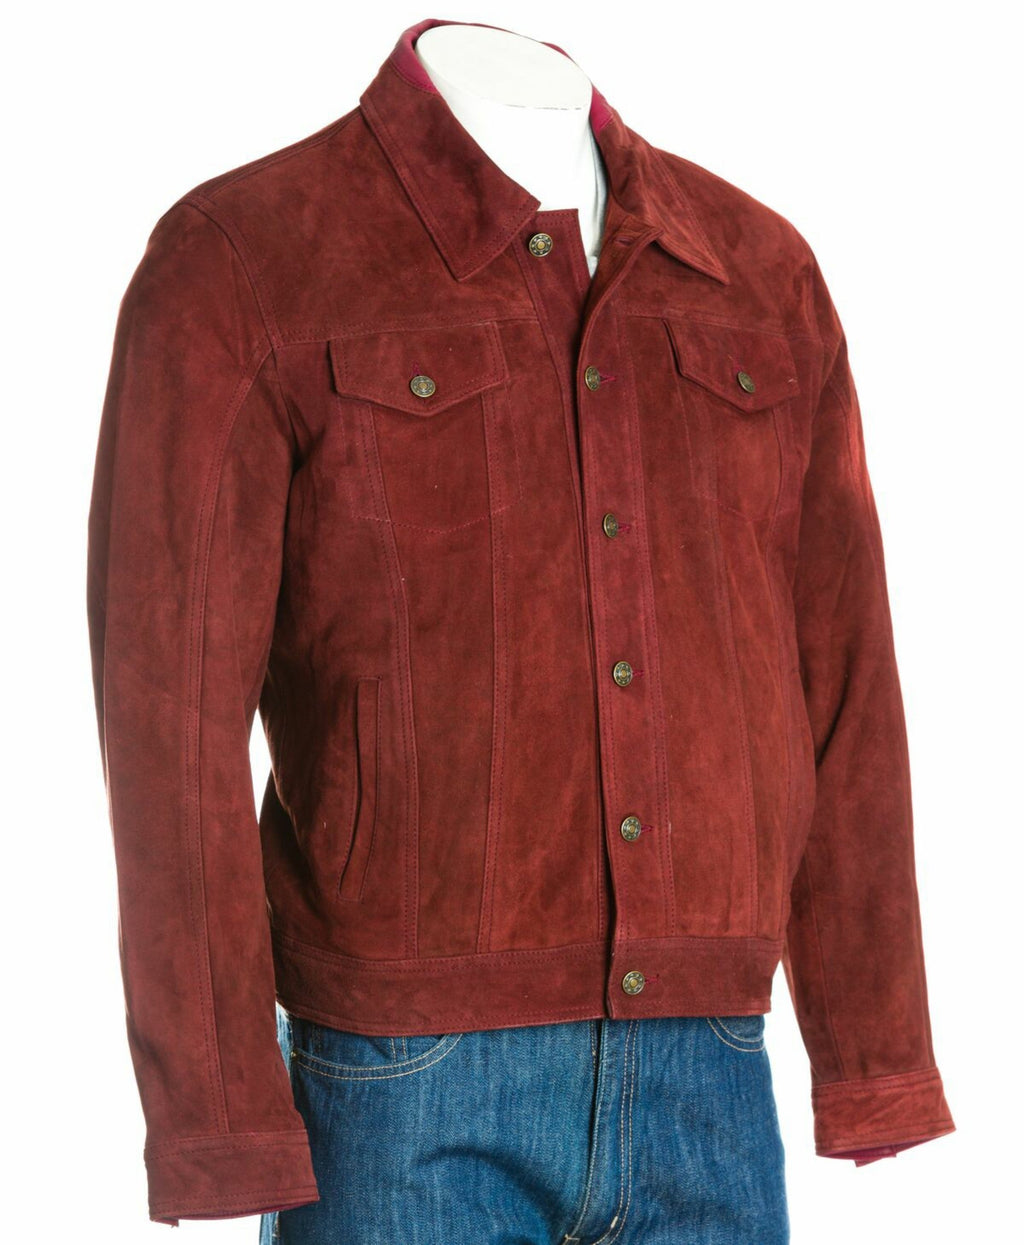 Men's Burgundy Denim Shirt Style Suede Jacket: Antonio